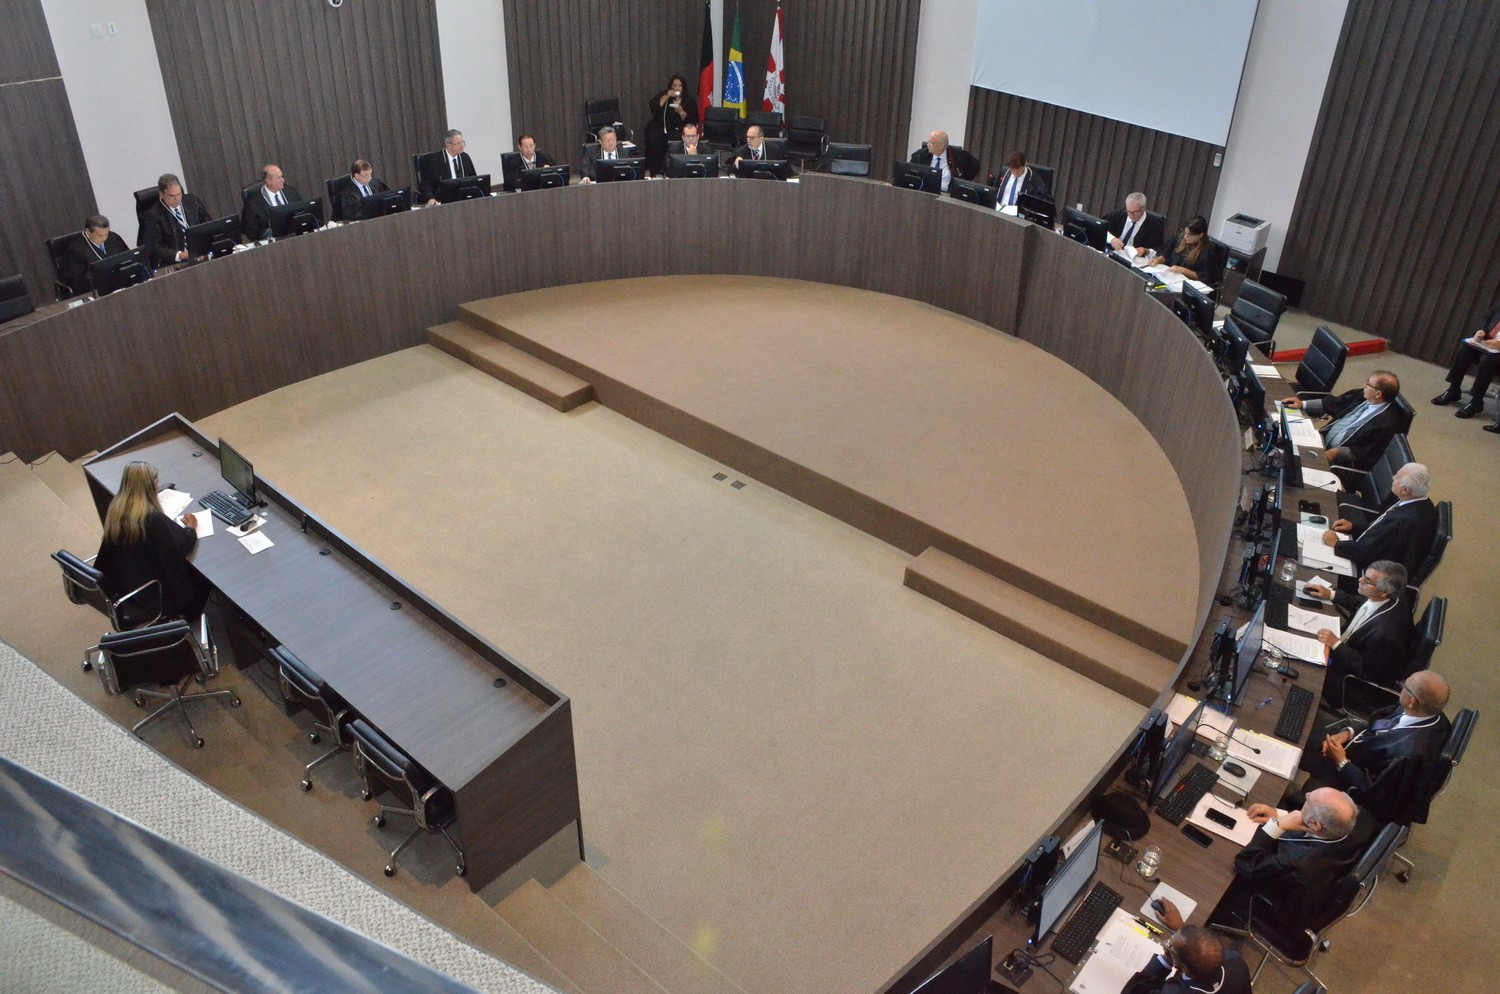 Lei cria novas vagas para desembargador e procurador de justiça na Paraíba